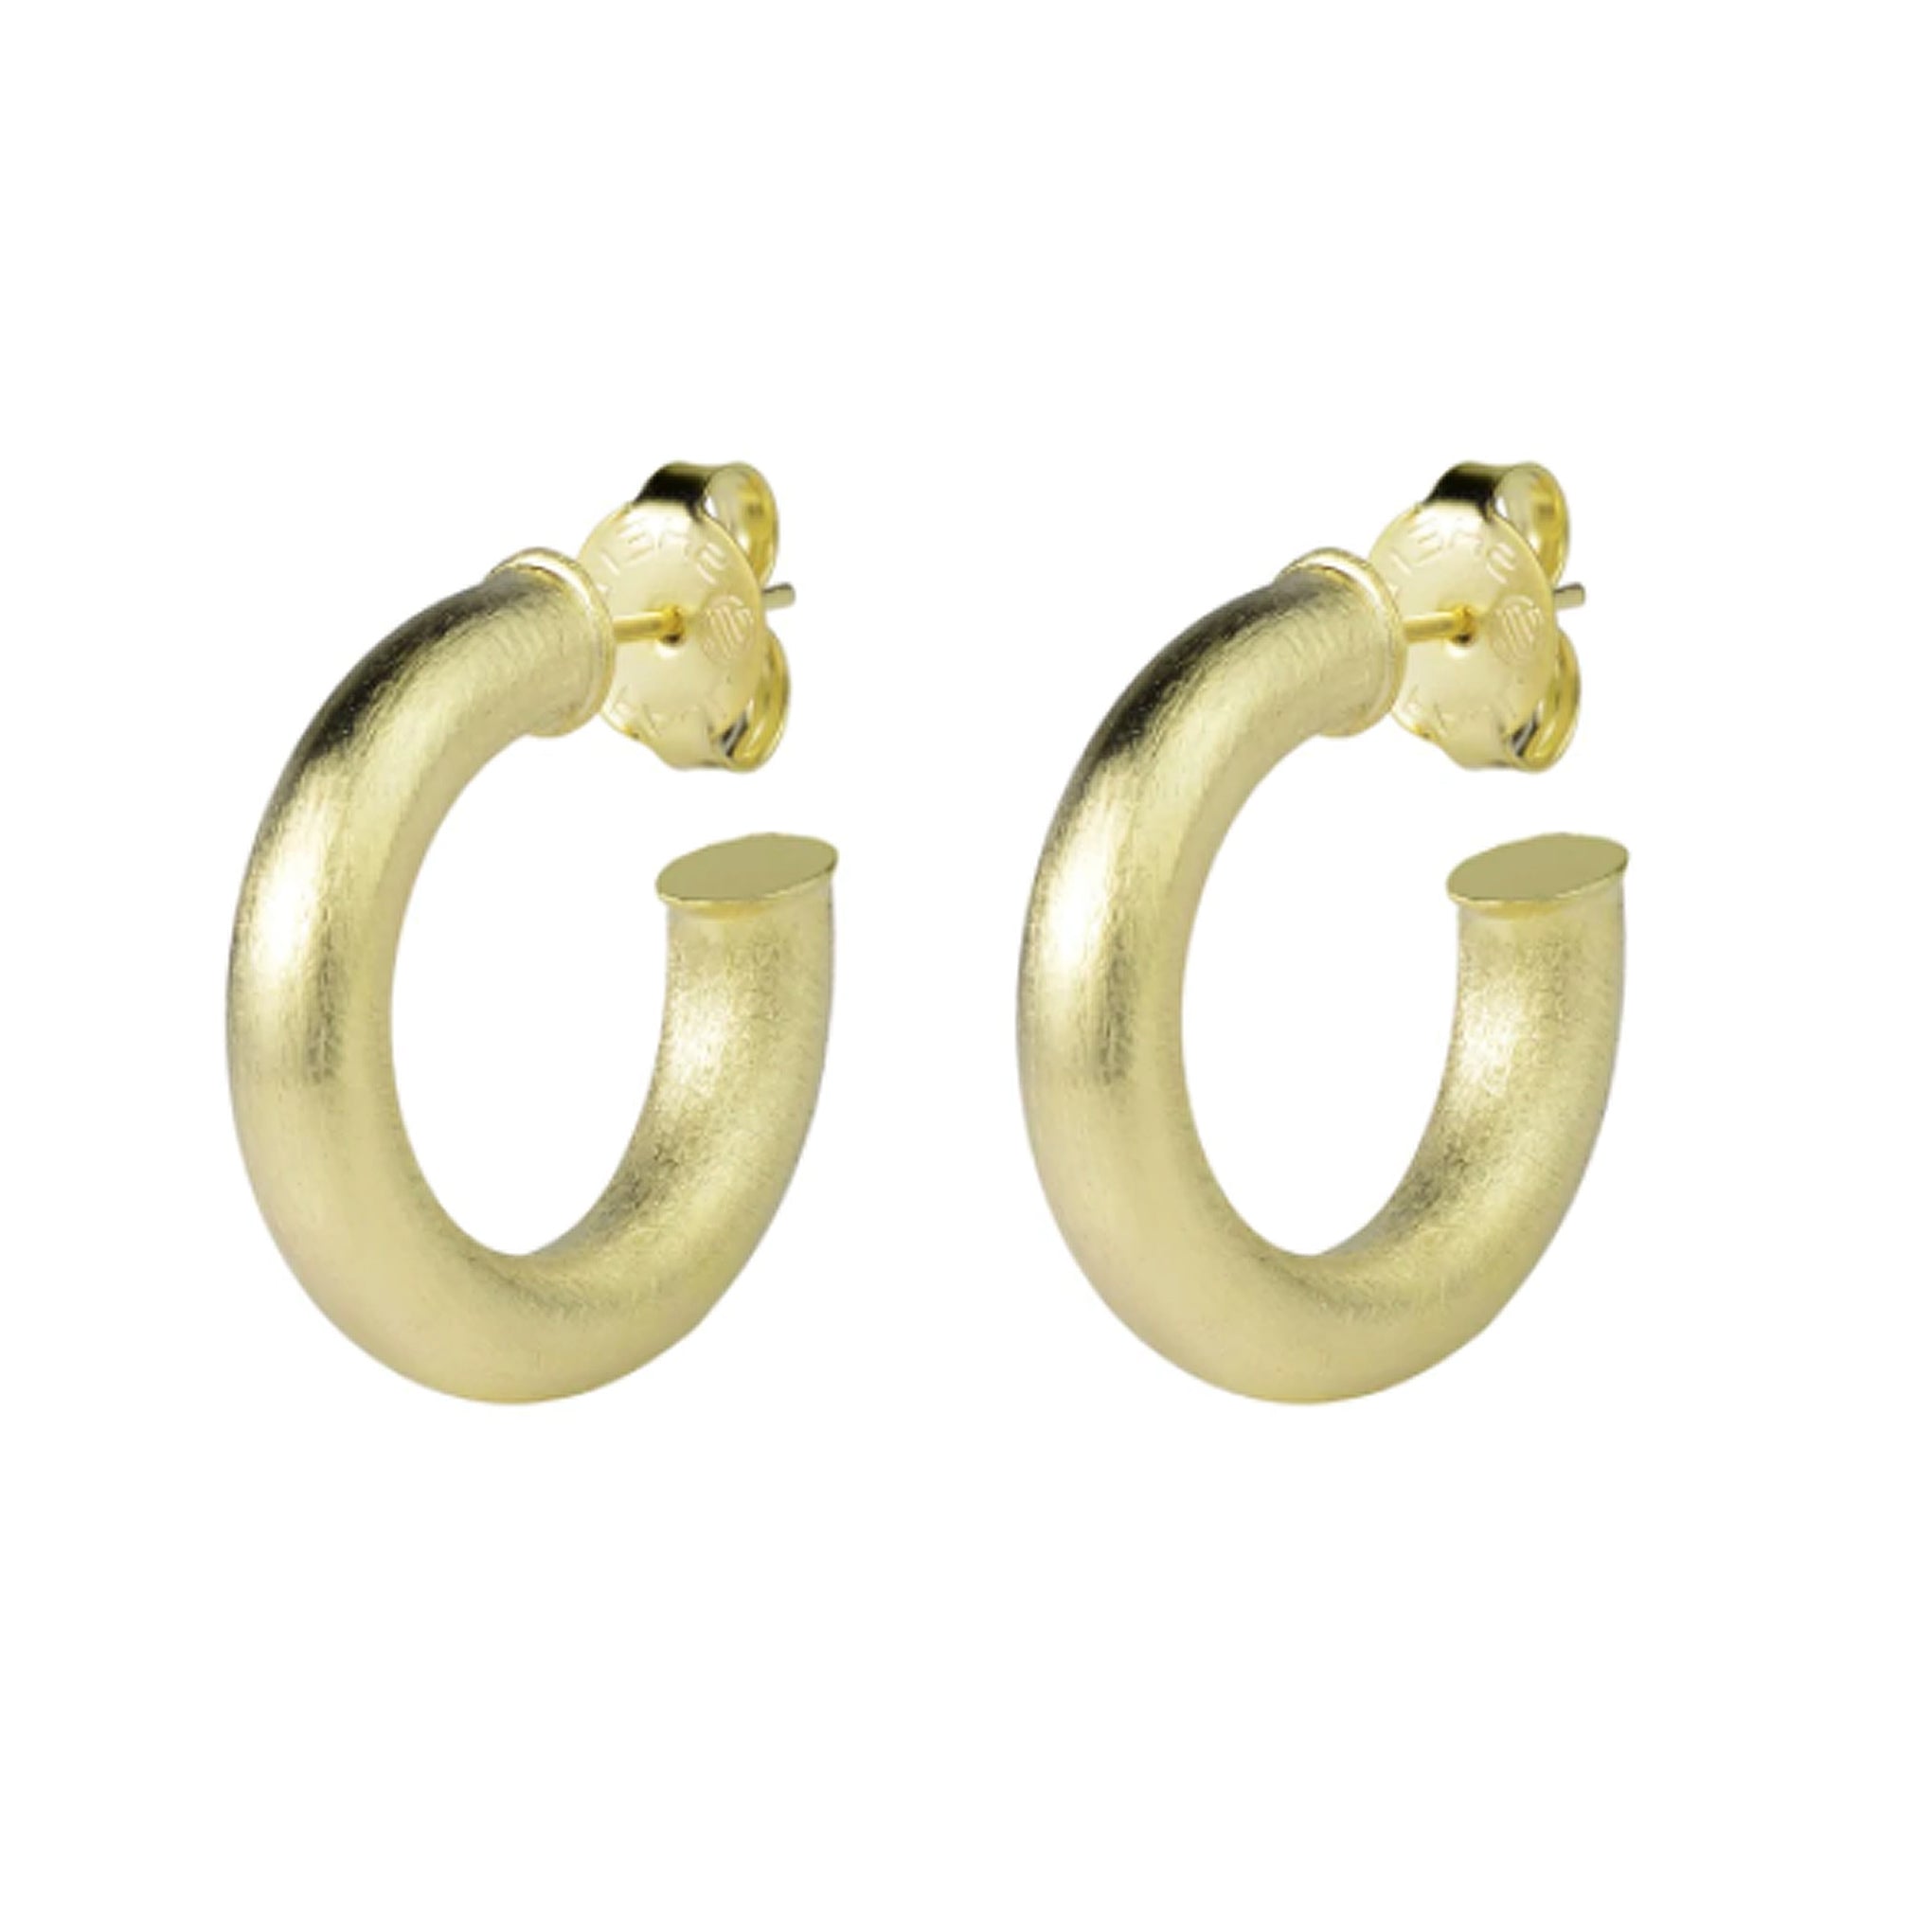 Sheila Fajl Thin Petite Chantal Hoop Earrings in Brushed Gold Plated